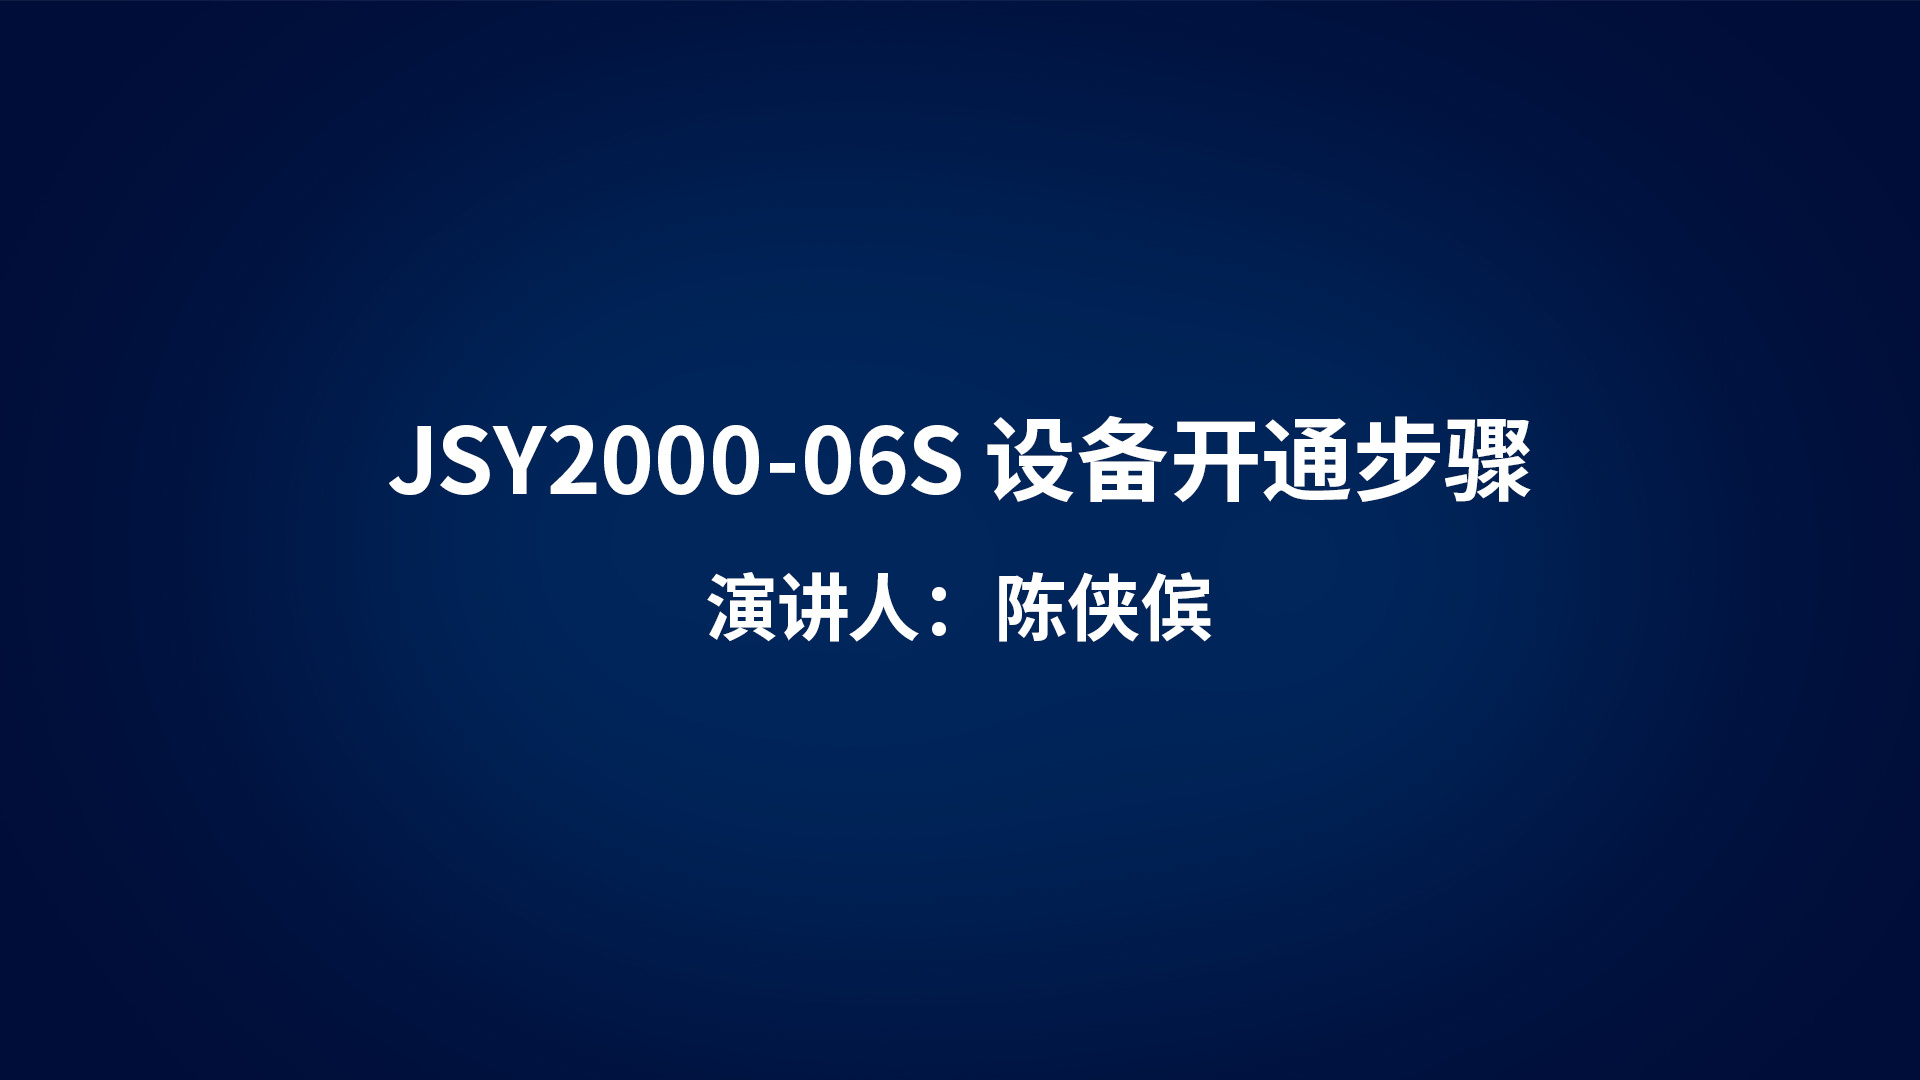 JSY2000-06S设备开通步骤